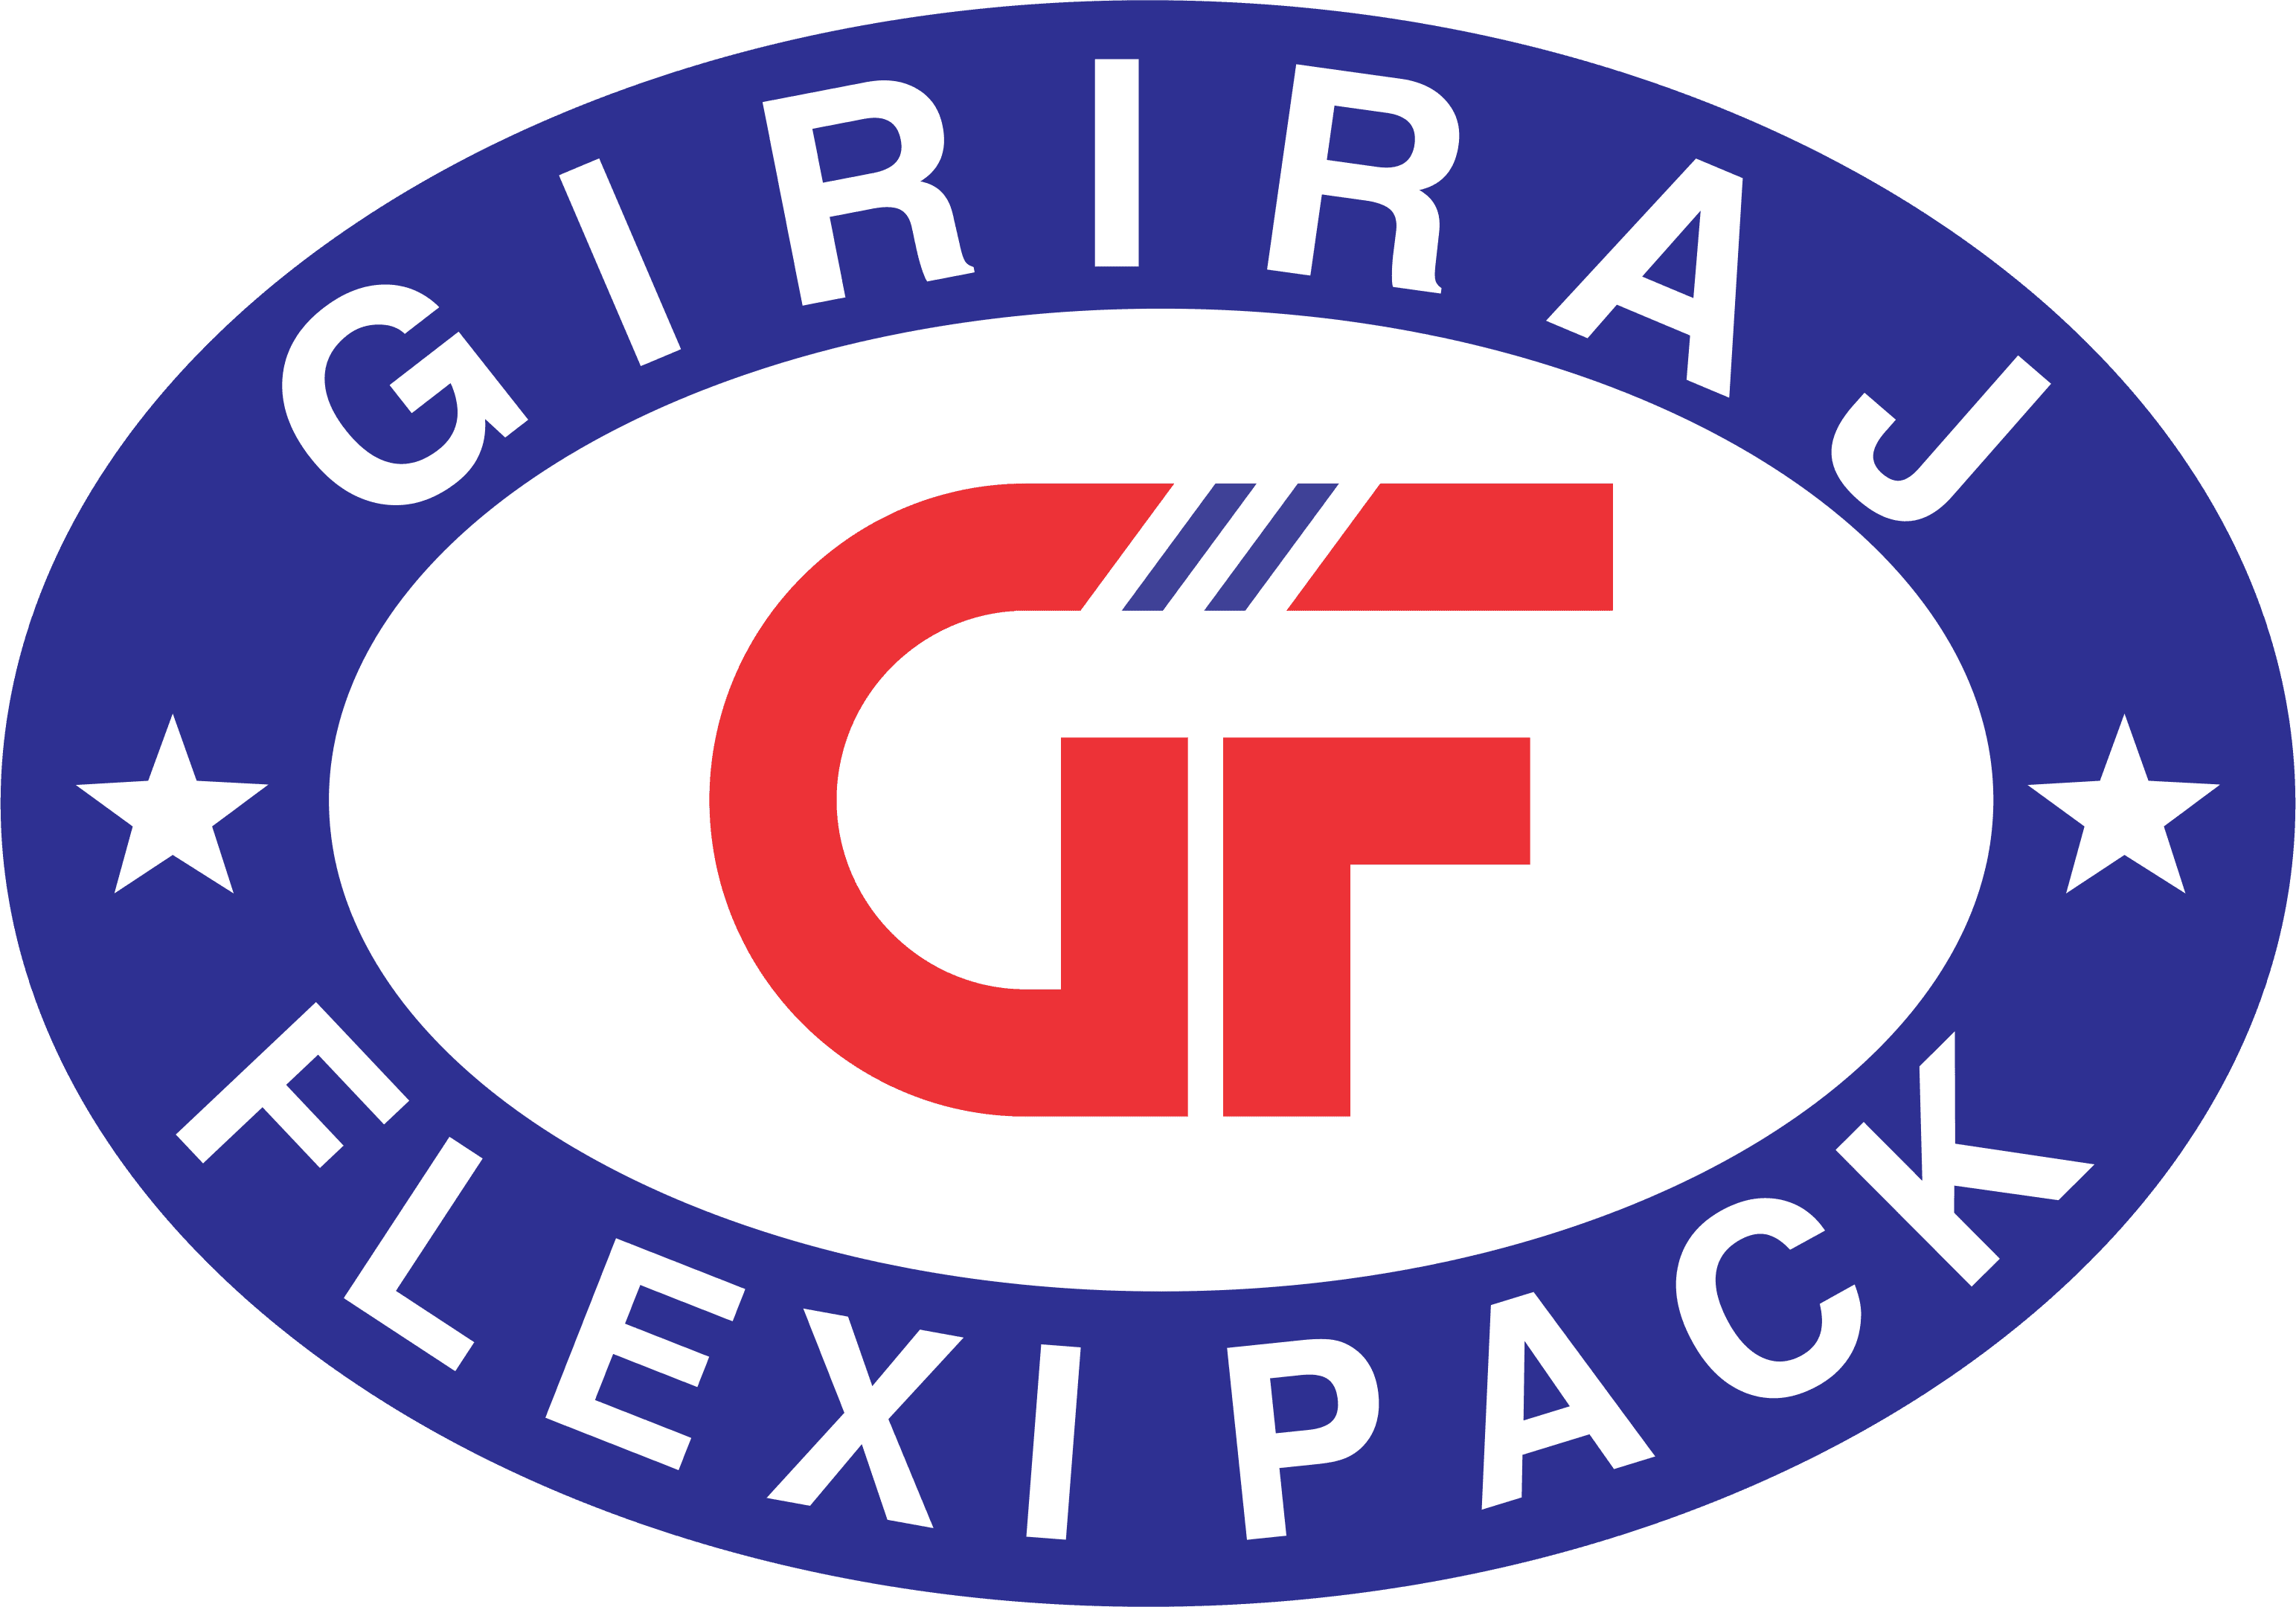 GIRIRAJ FLEXI PACK PVT. LTD.